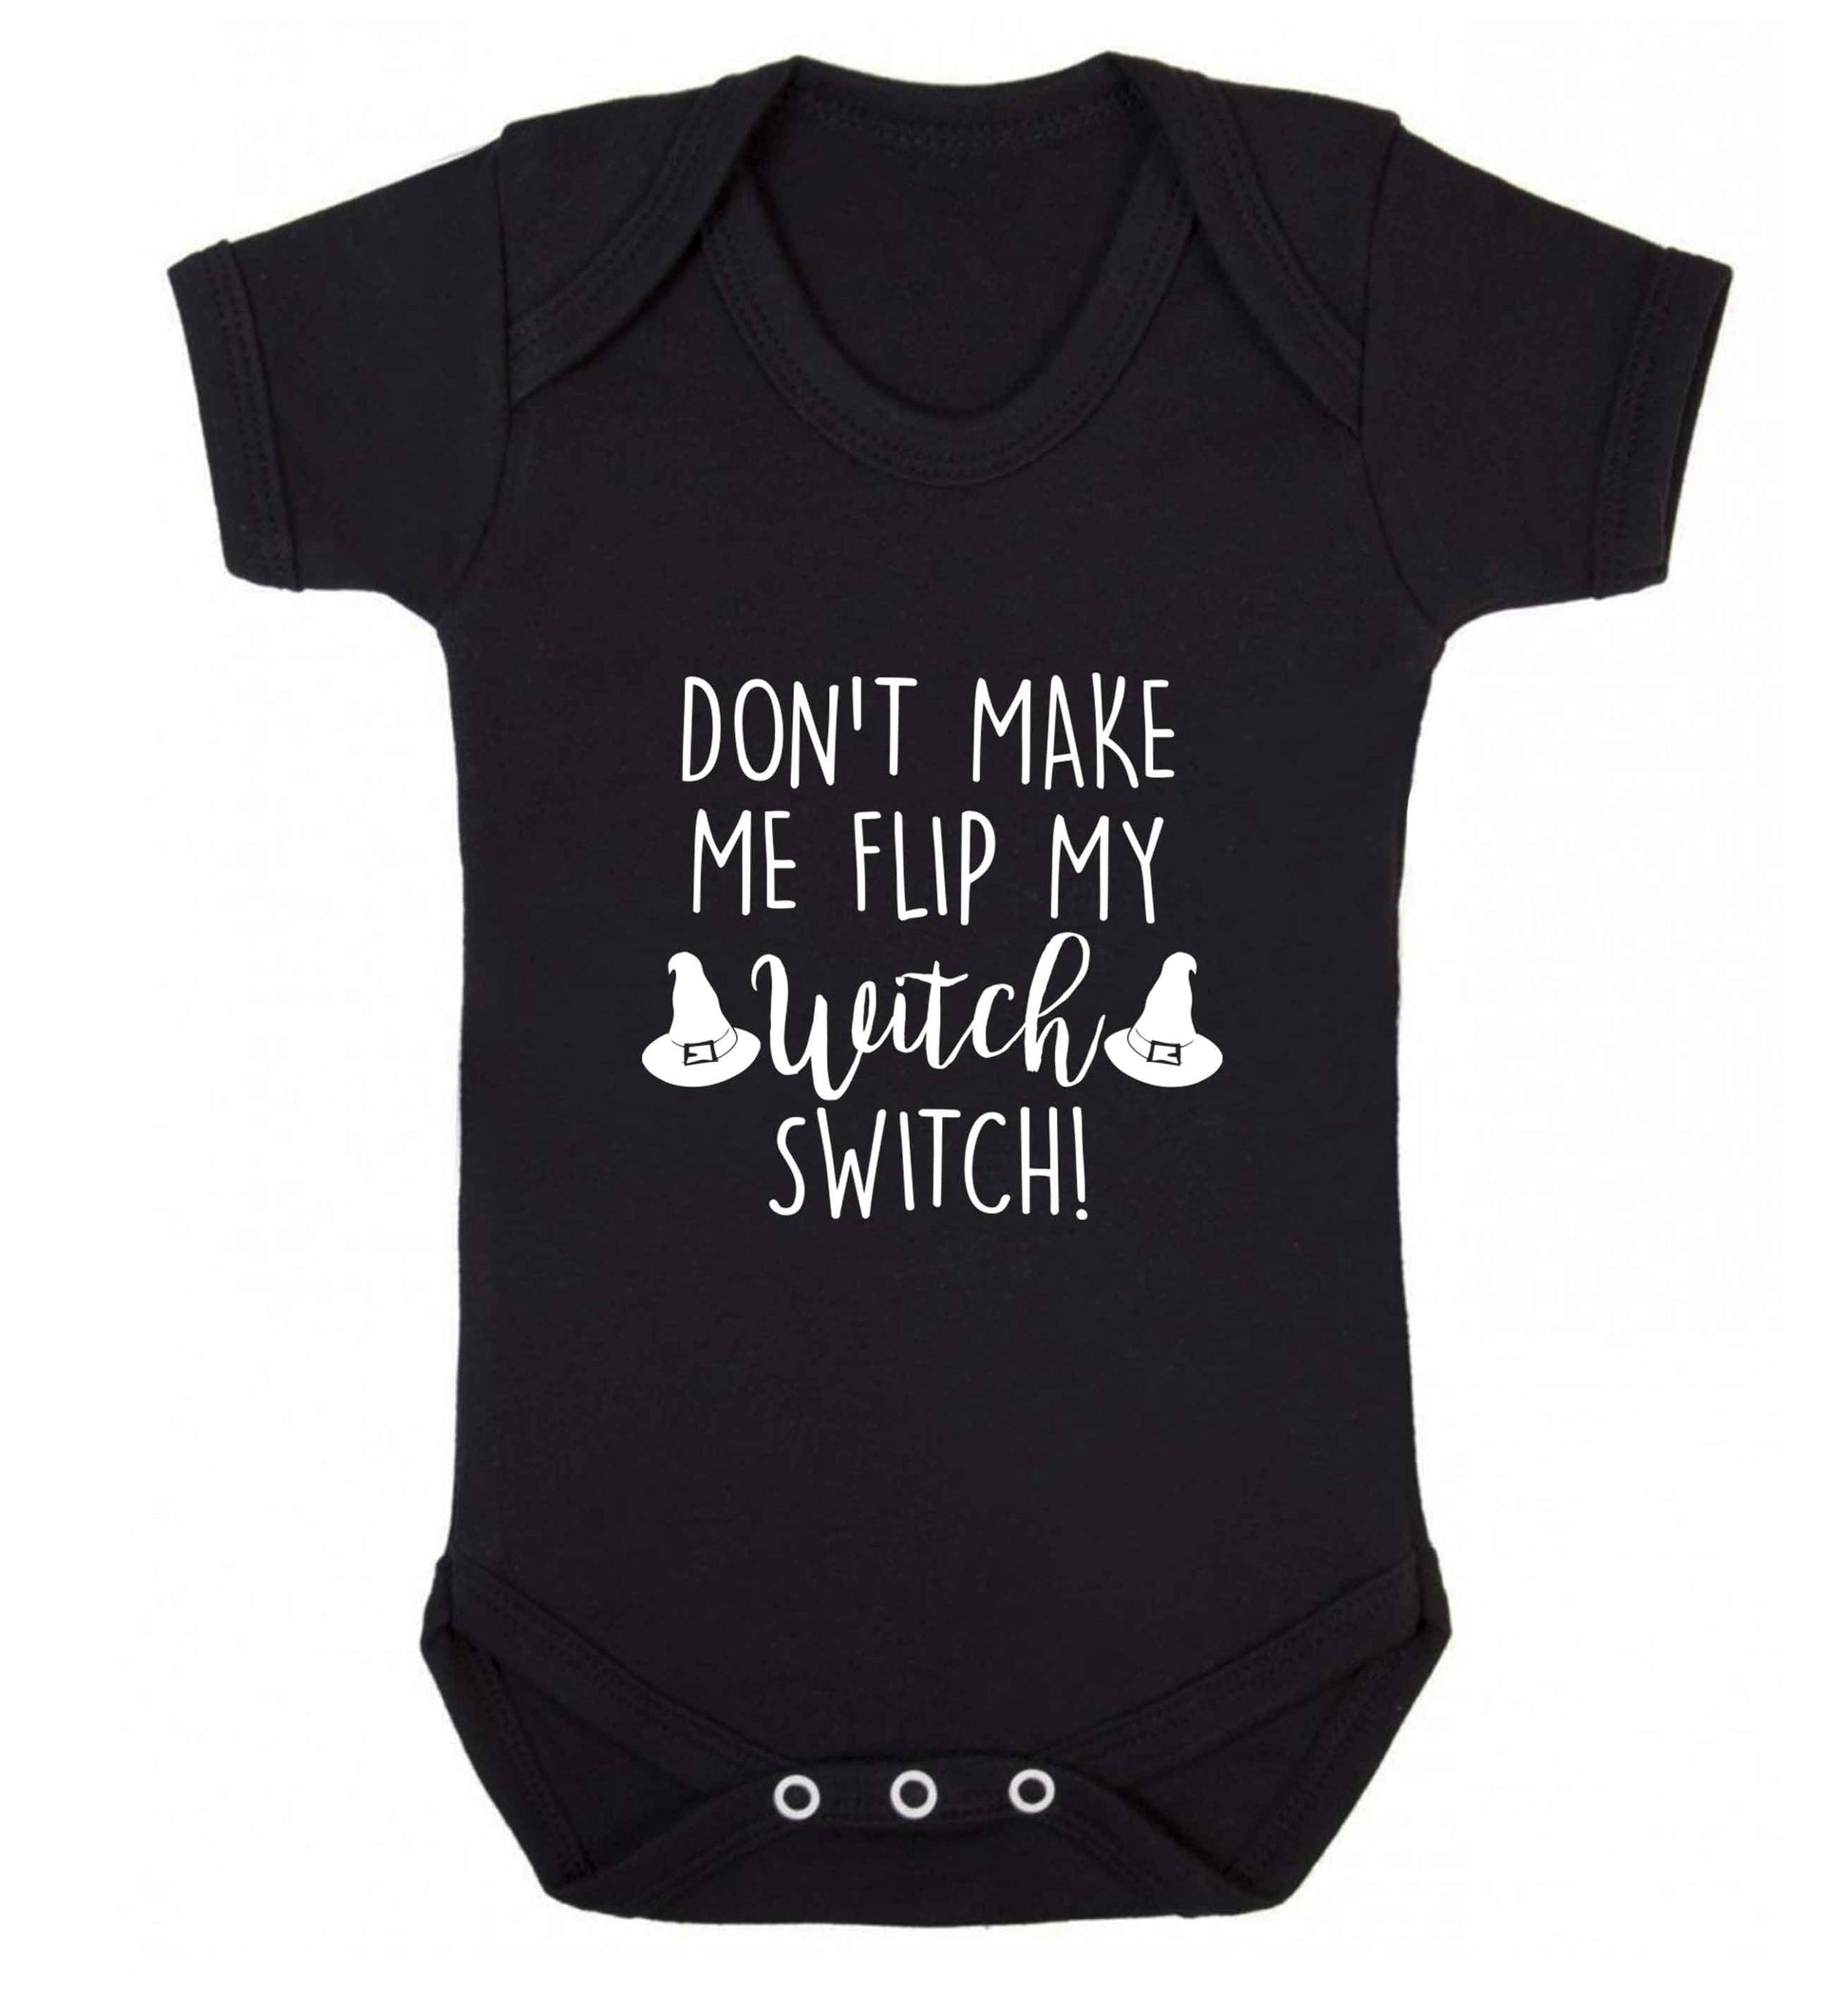 Don't make me flip my witch switch baby vest black 18-24 months